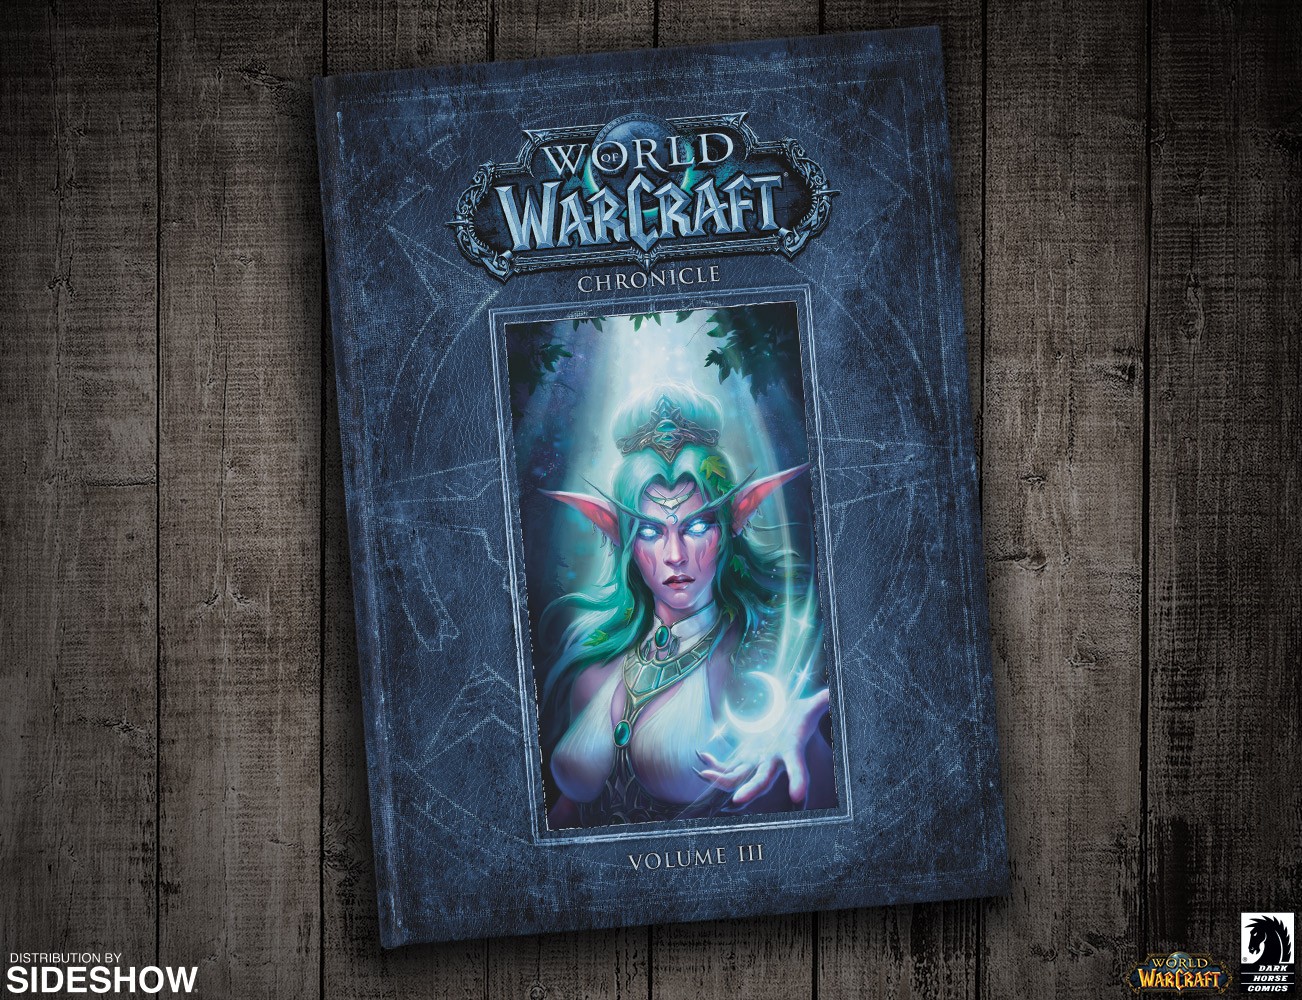 World of Warcraft Chronicle Volume 3- Prototype Shown